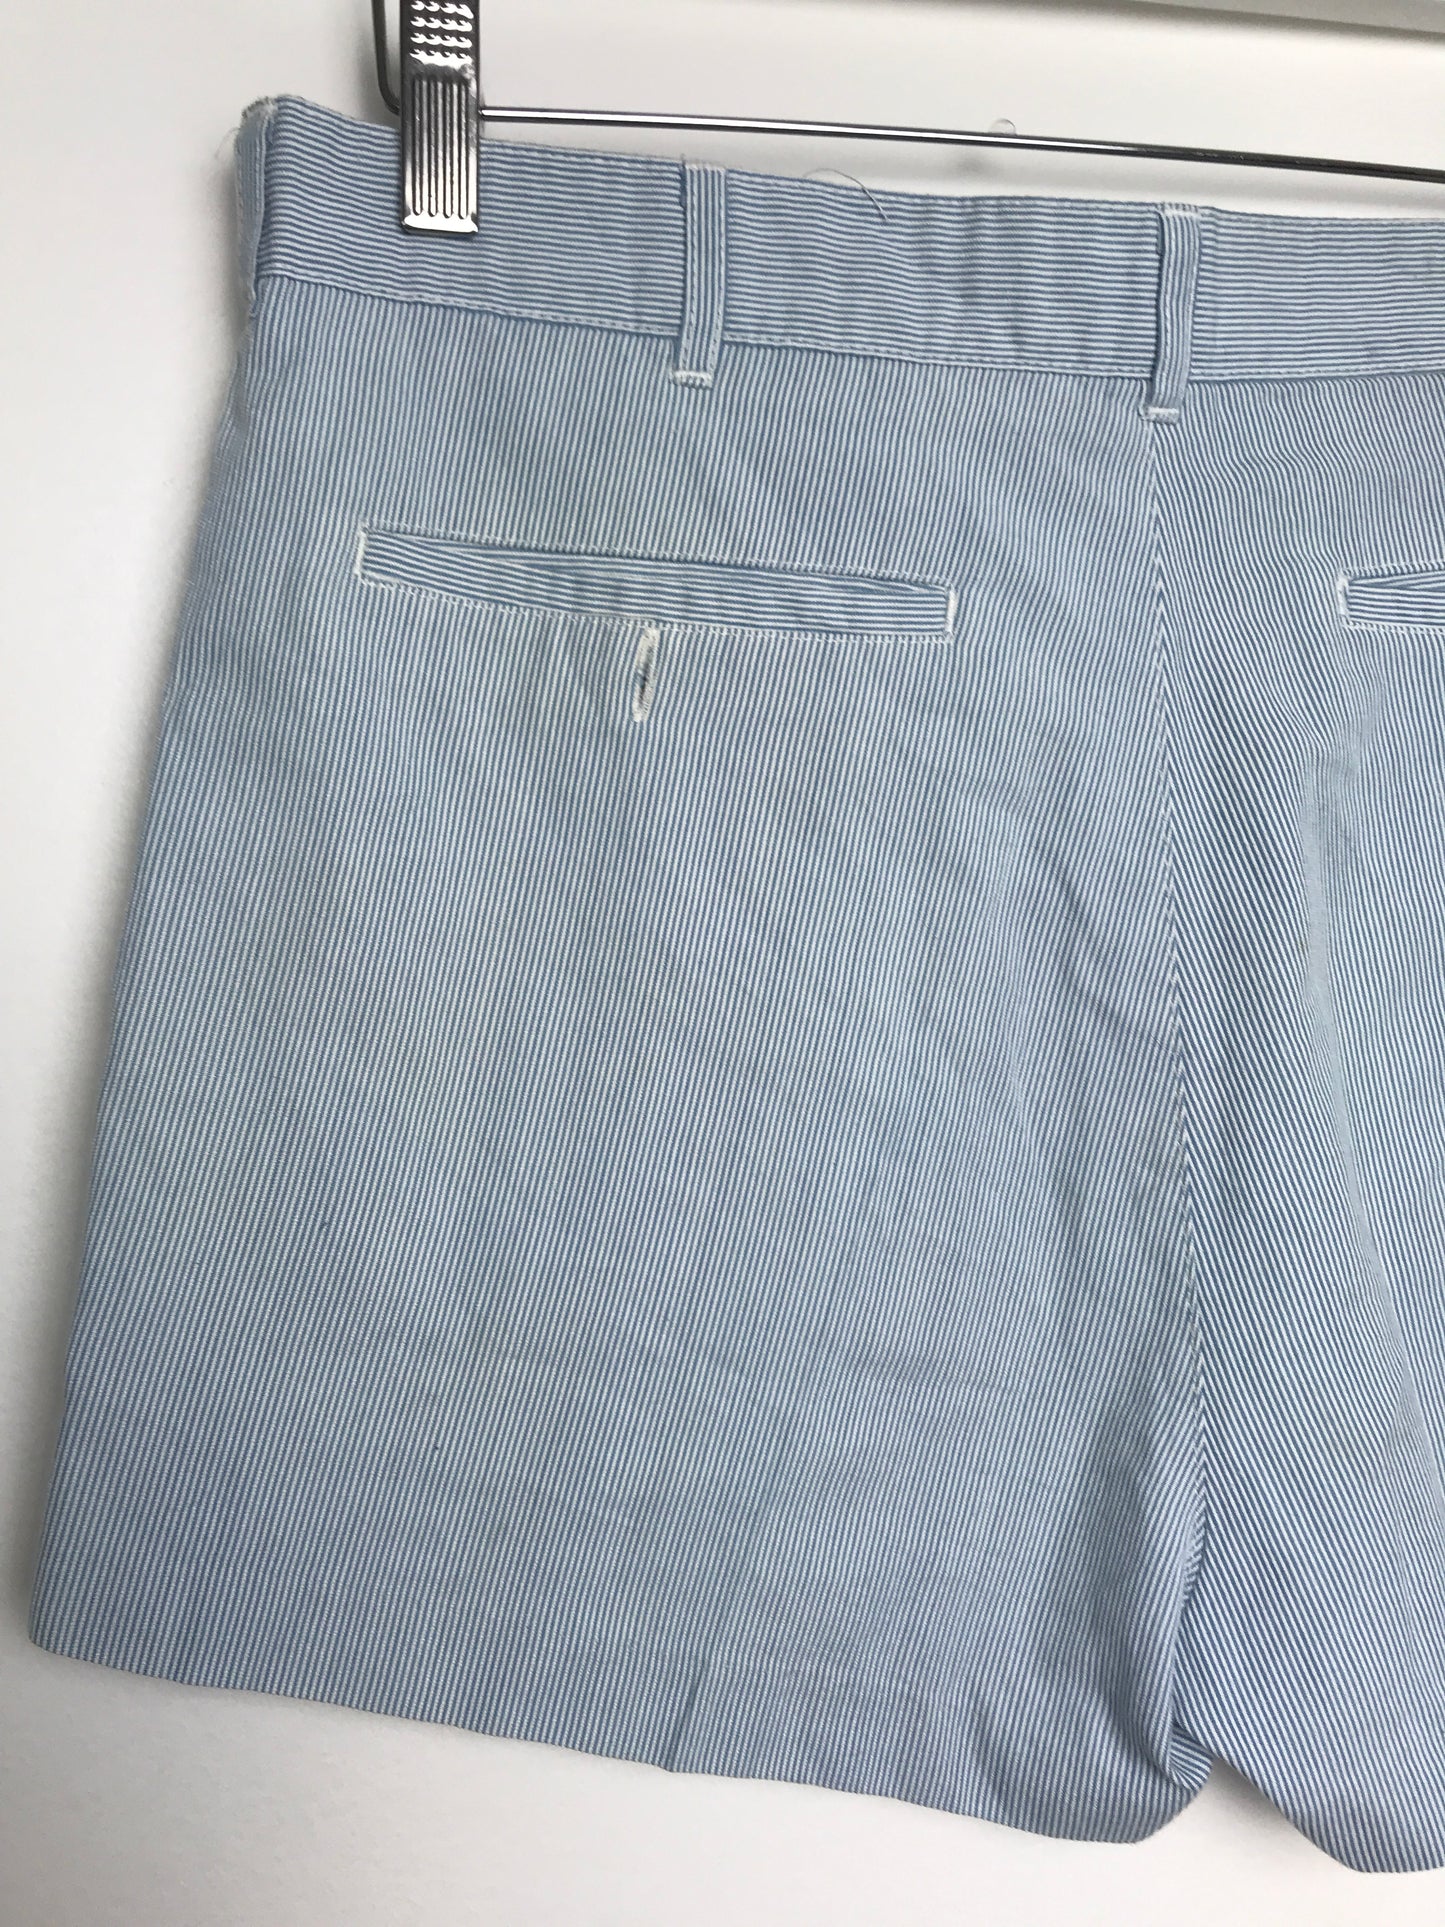 Vintage Givenchy Pinstripe Shorts size 32